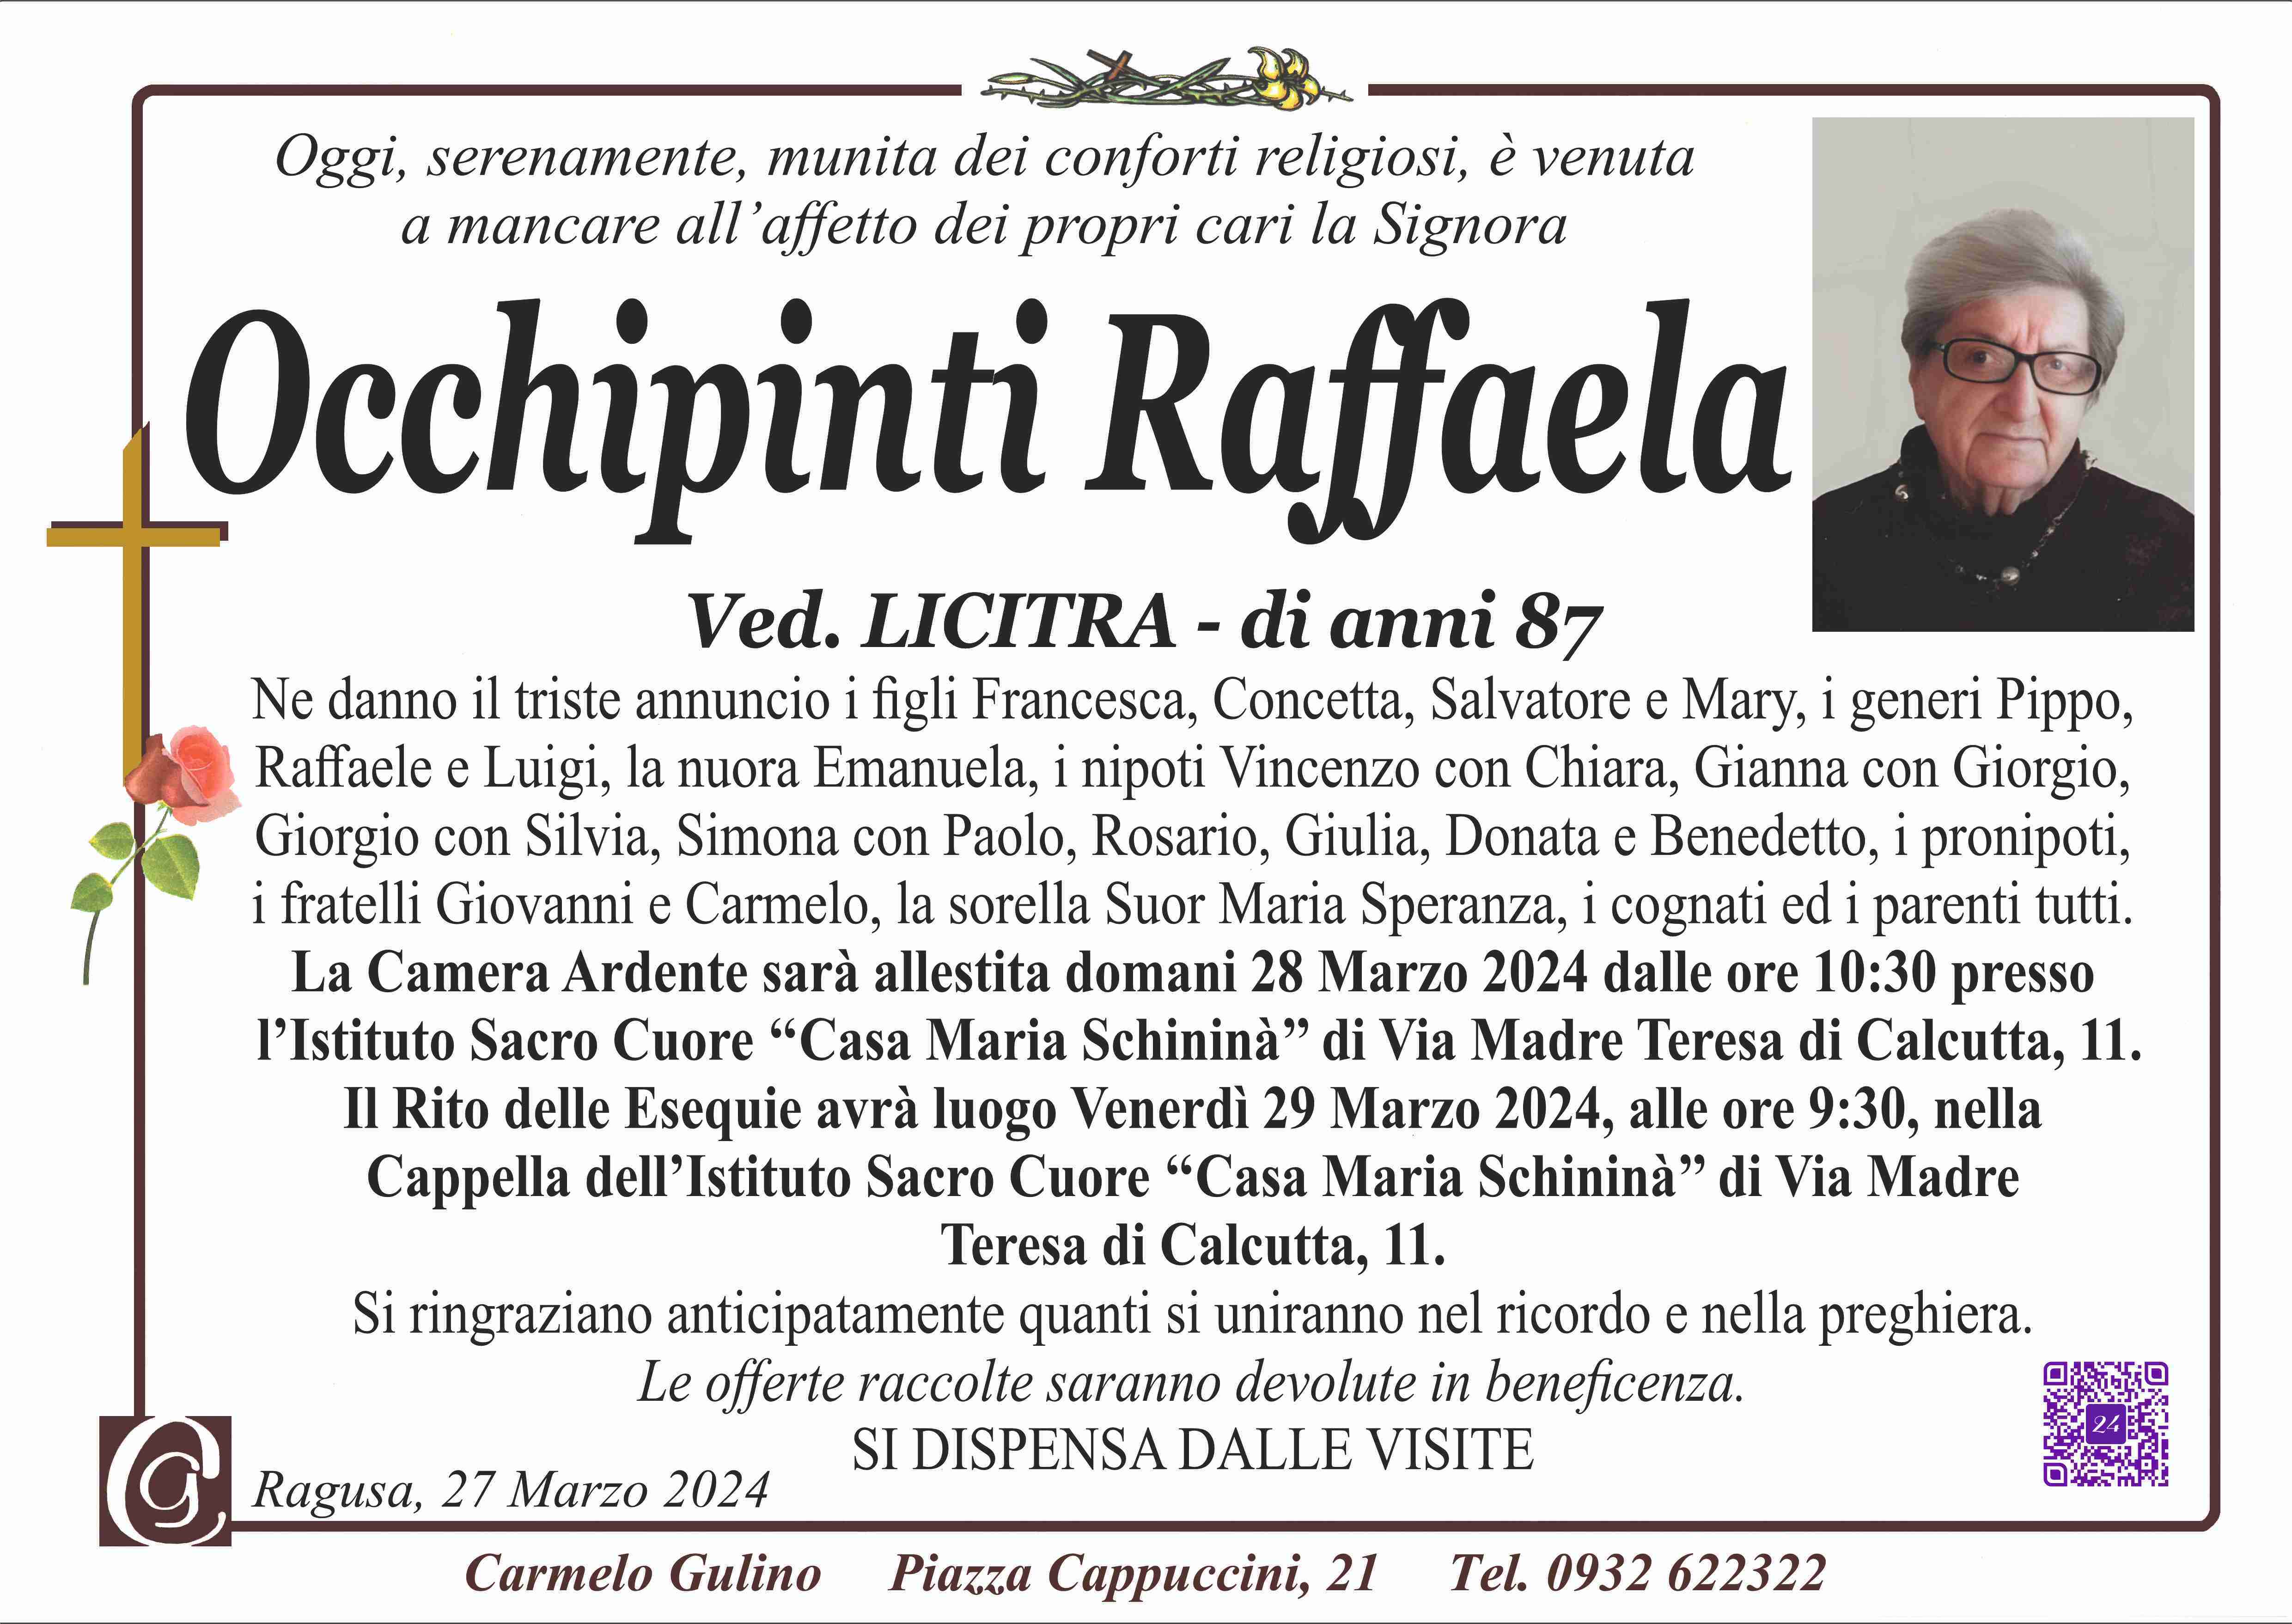 Raffaela Occhipinti